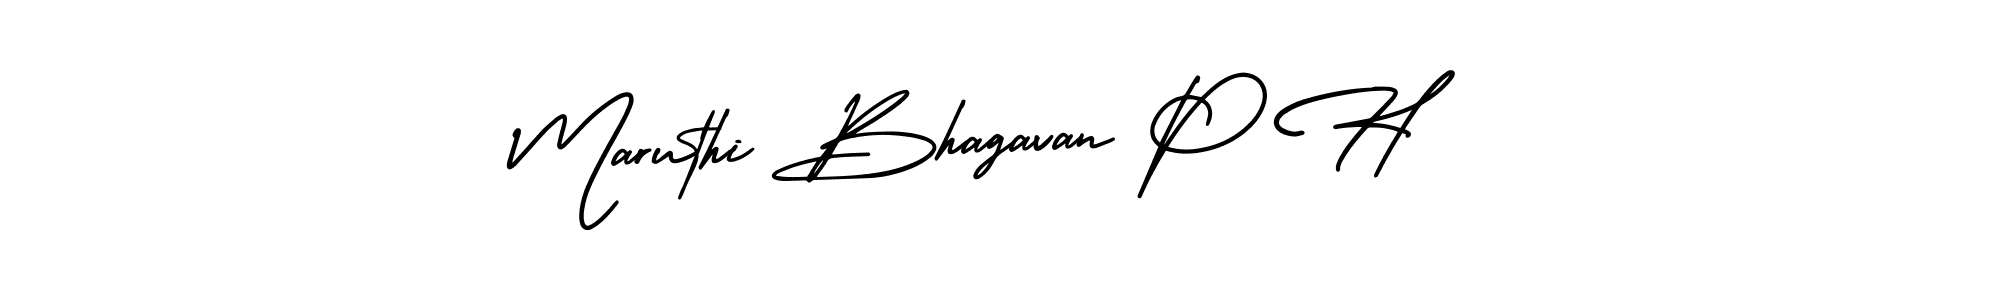 Best and Professional Signature Style for Maruthi Bhagavan P H. AmerikaSignatureDemo-Regular Best Signature Style Collection. Maruthi Bhagavan P H signature style 3 images and pictures png